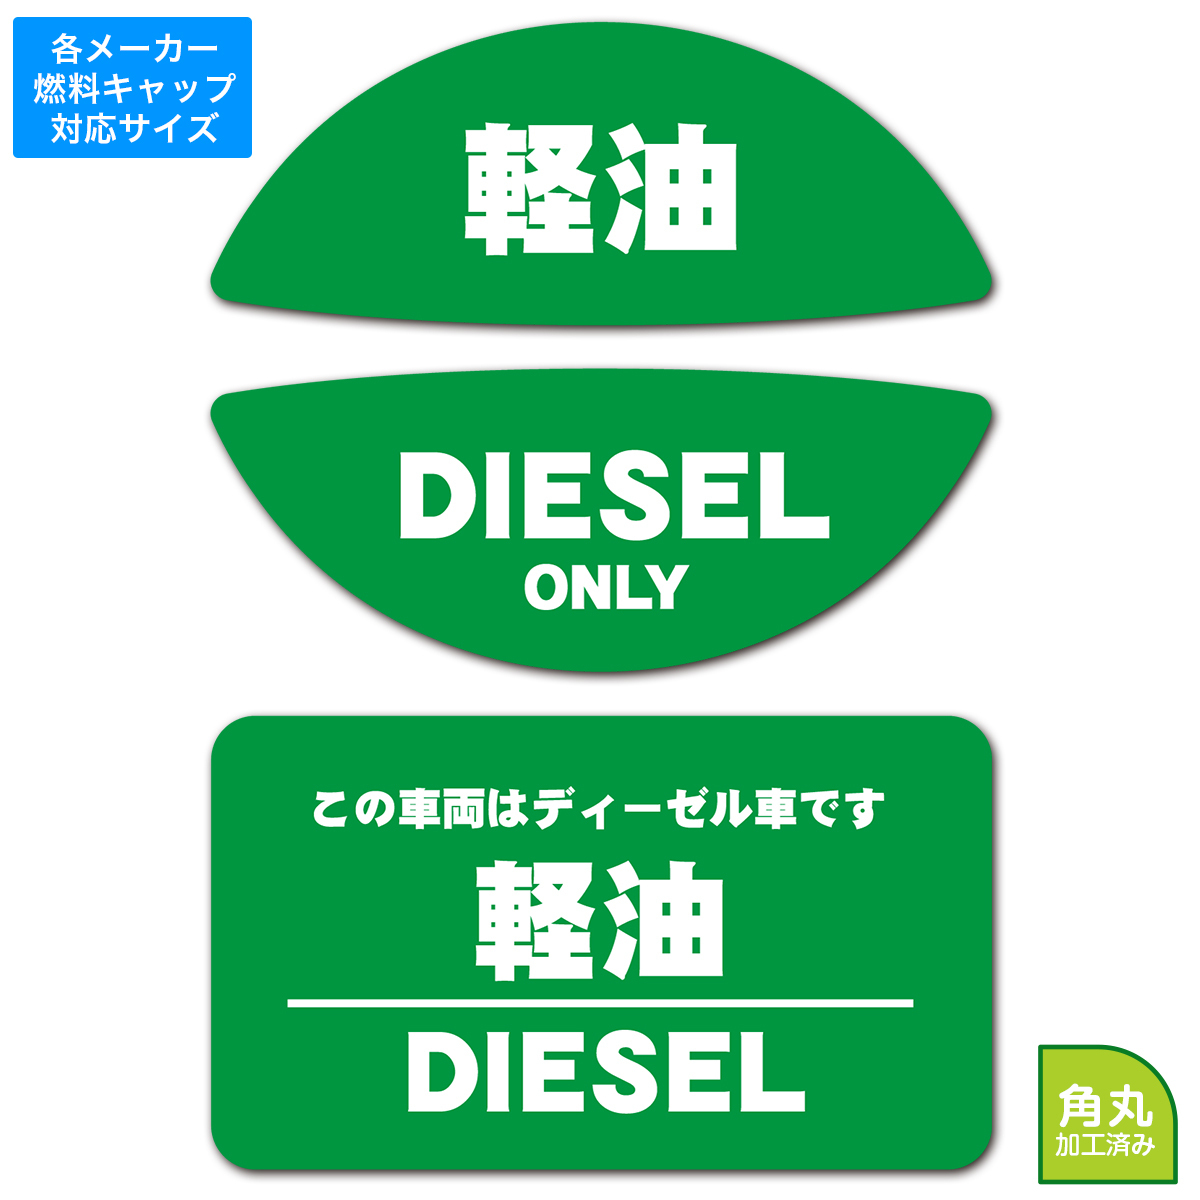 EXPROUD 給油口キャップ用燃料表示ステッカー&長方形ステッカーセット ディーゼル 軽油 油種間違い防止 グリーン FCS-B 日本製-B09WDHXSMC_画像1